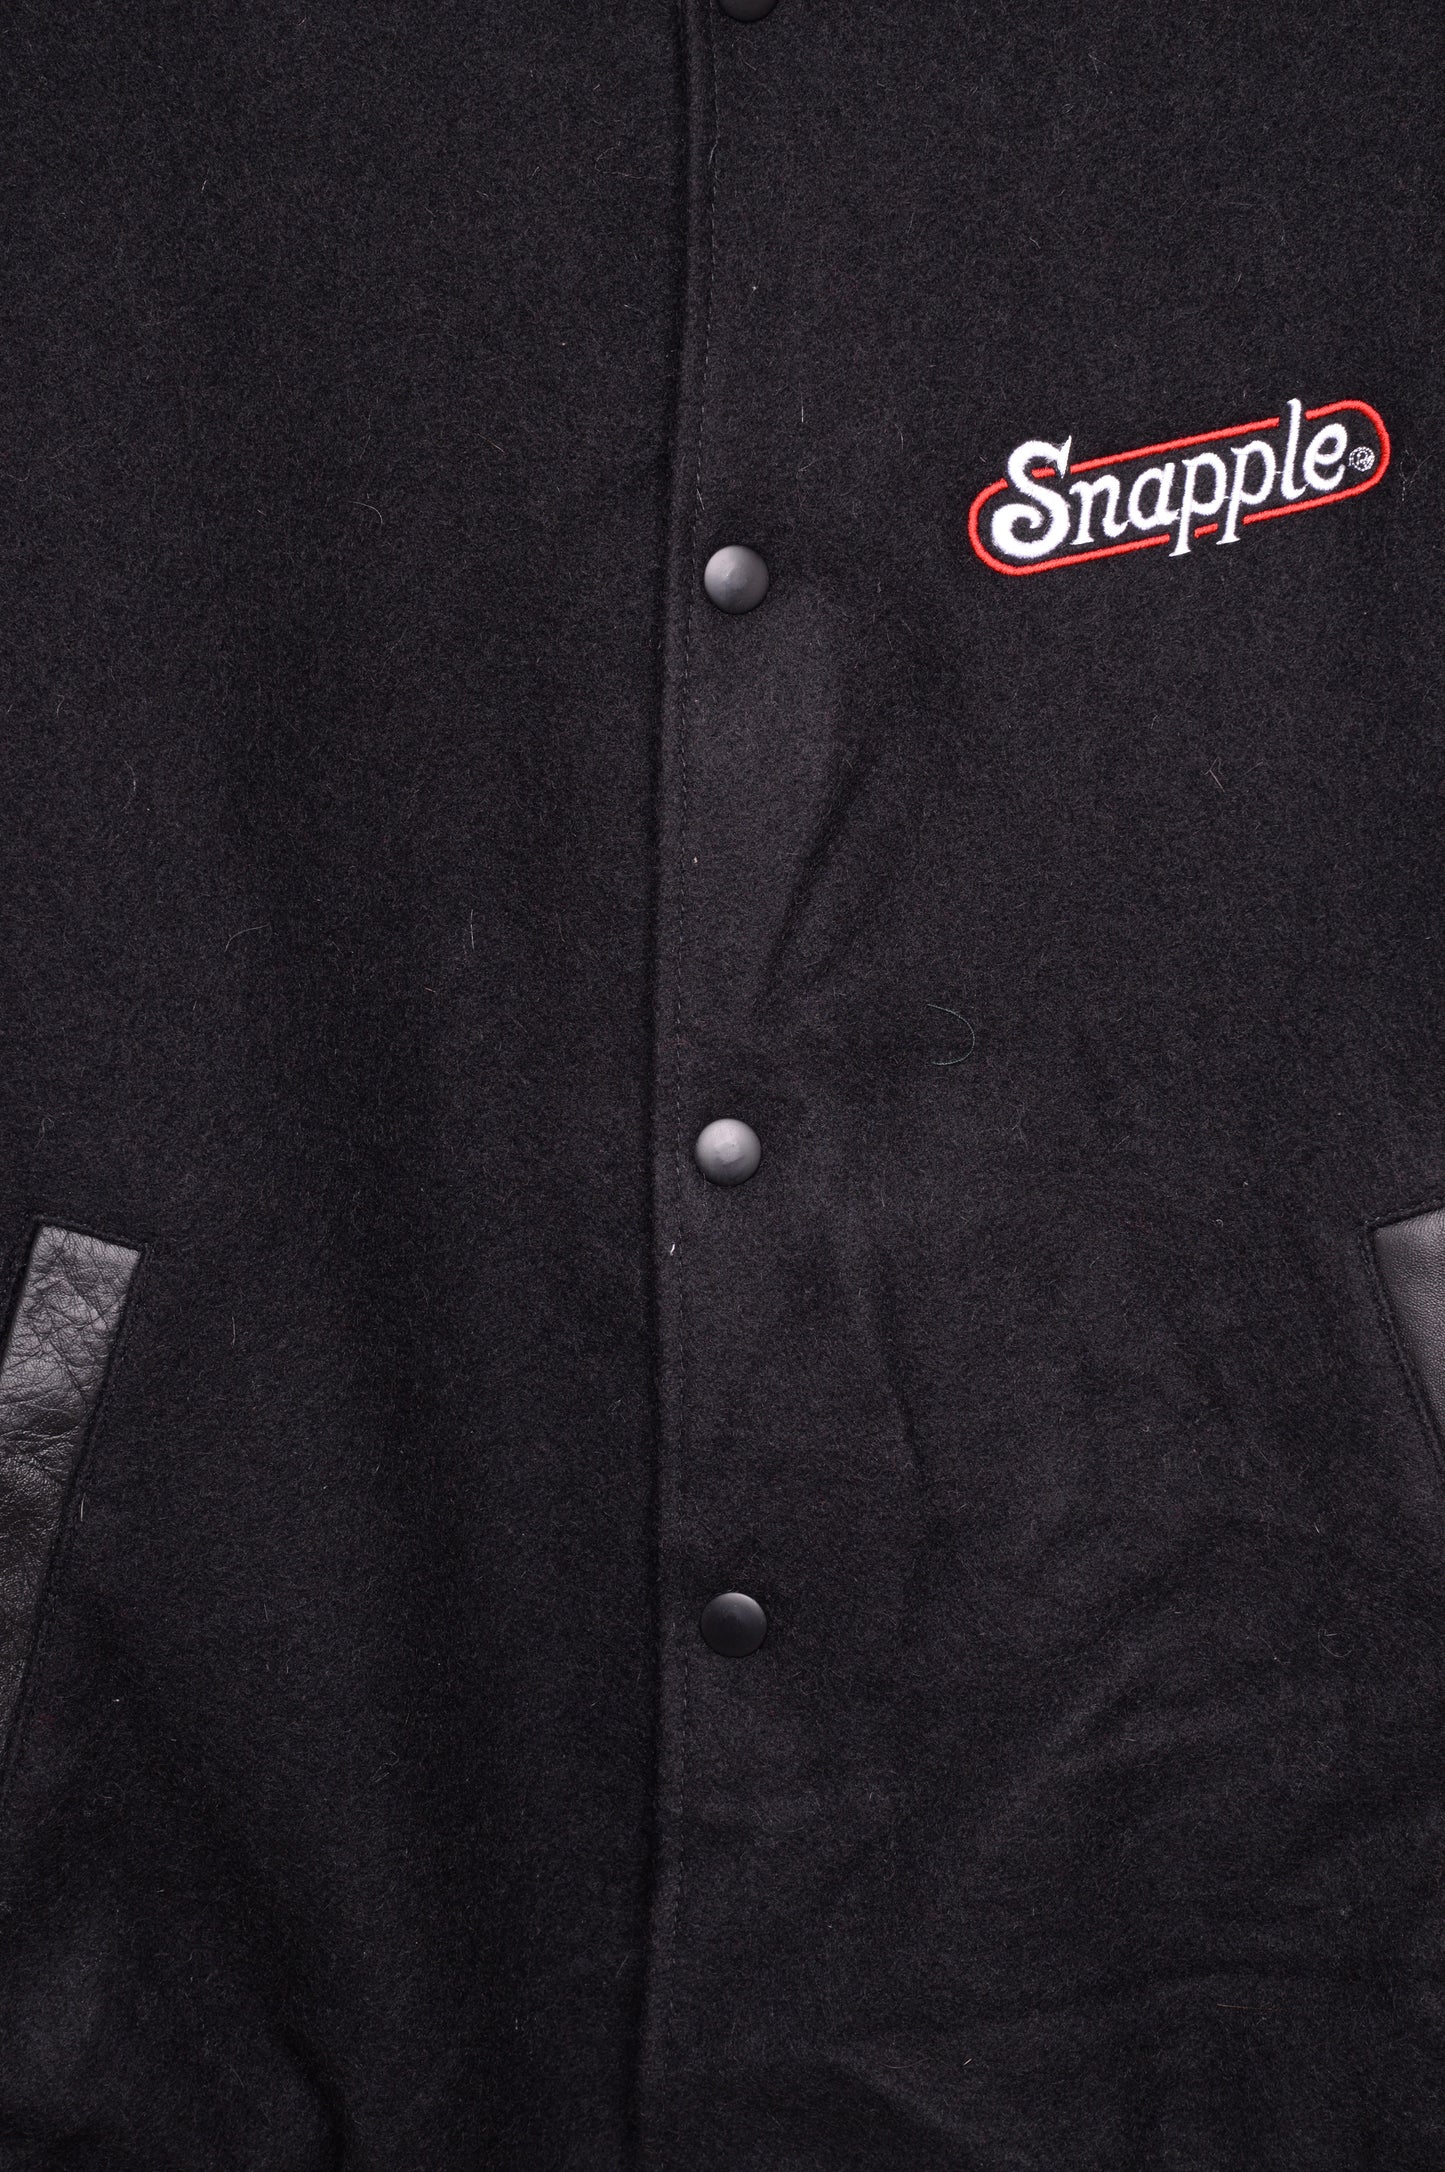 Snapple Letterman Jacket USA